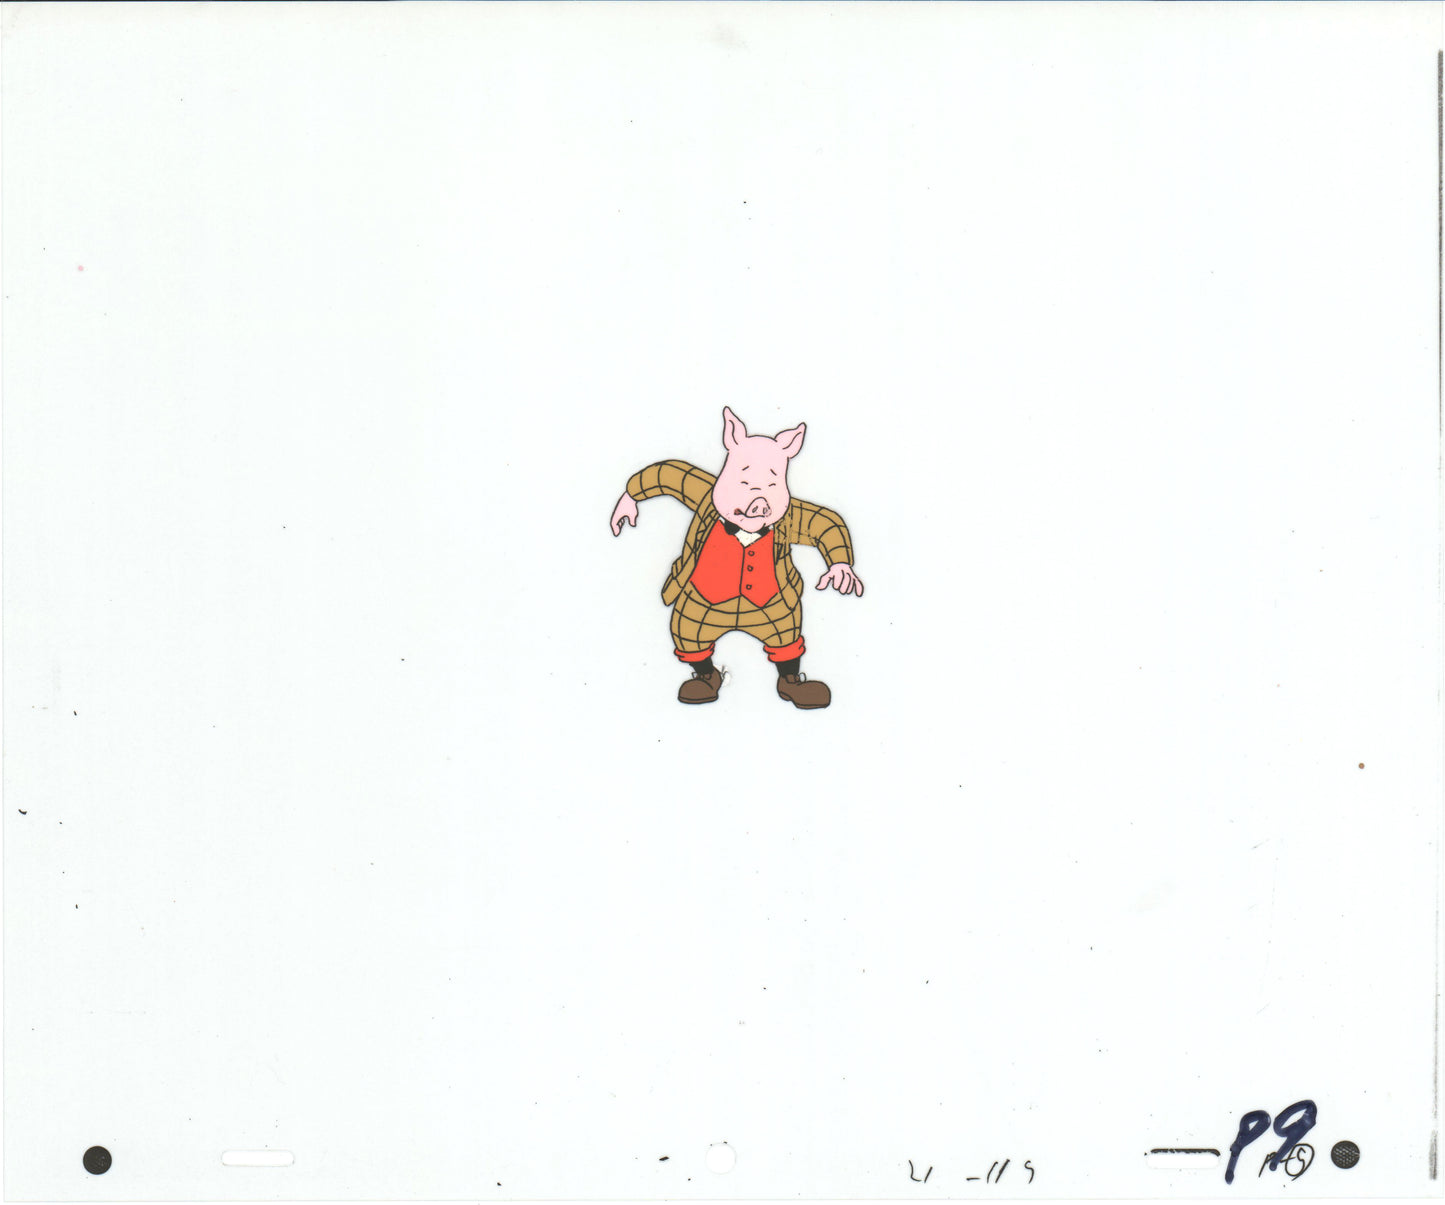 RUPERT Bear Podgy Pig Original Production Animation Cel from the Cartoon by Nelvana Tourtel Animation 1990s 8-342